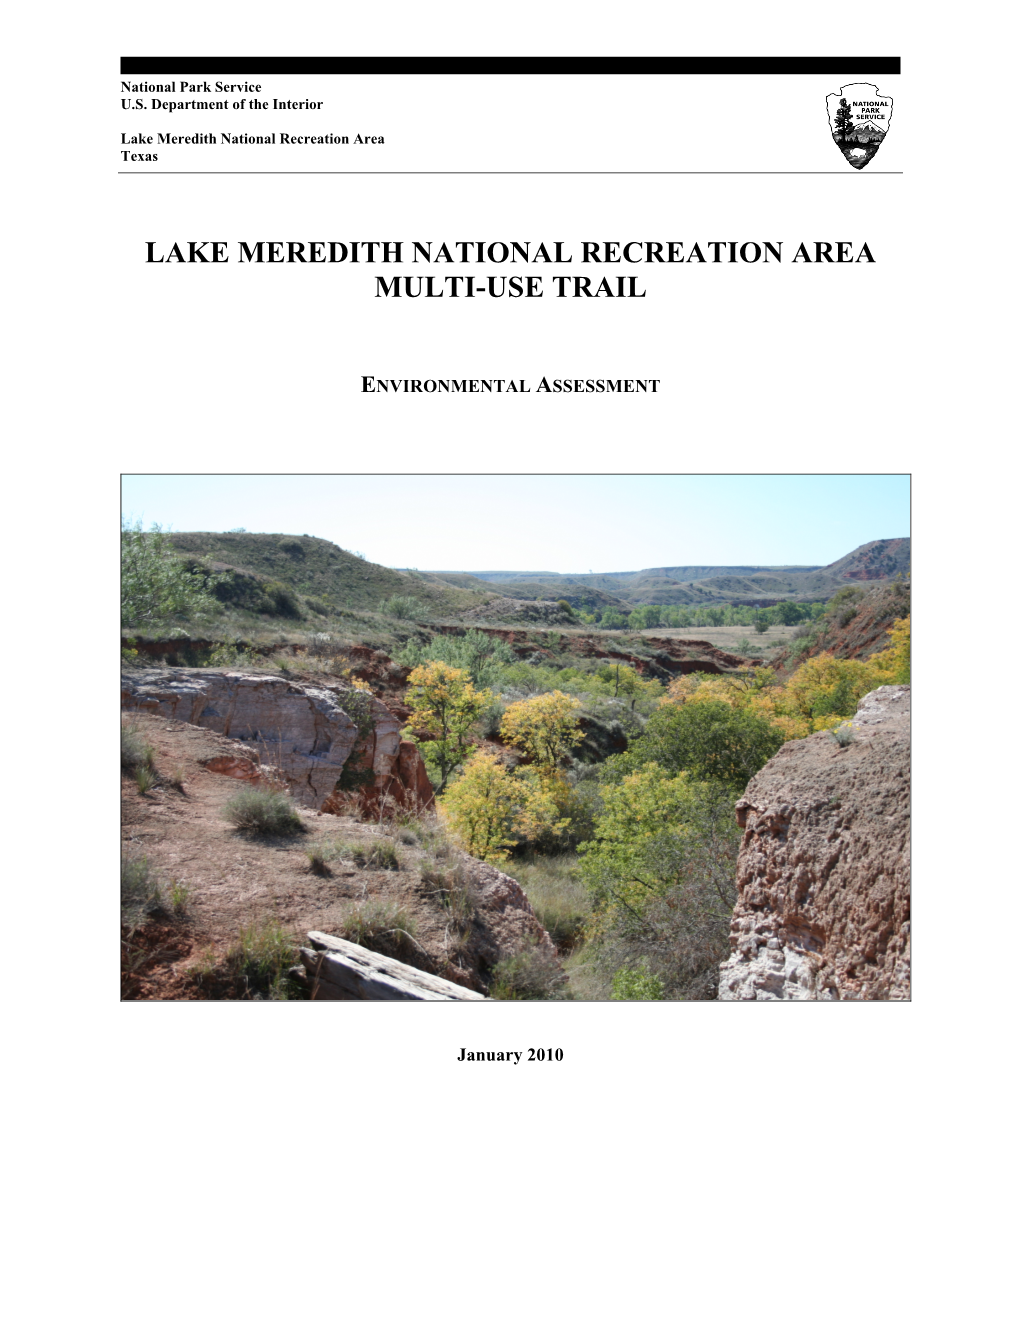 Lake Meredith National Recreation Area Multi-Use Trail